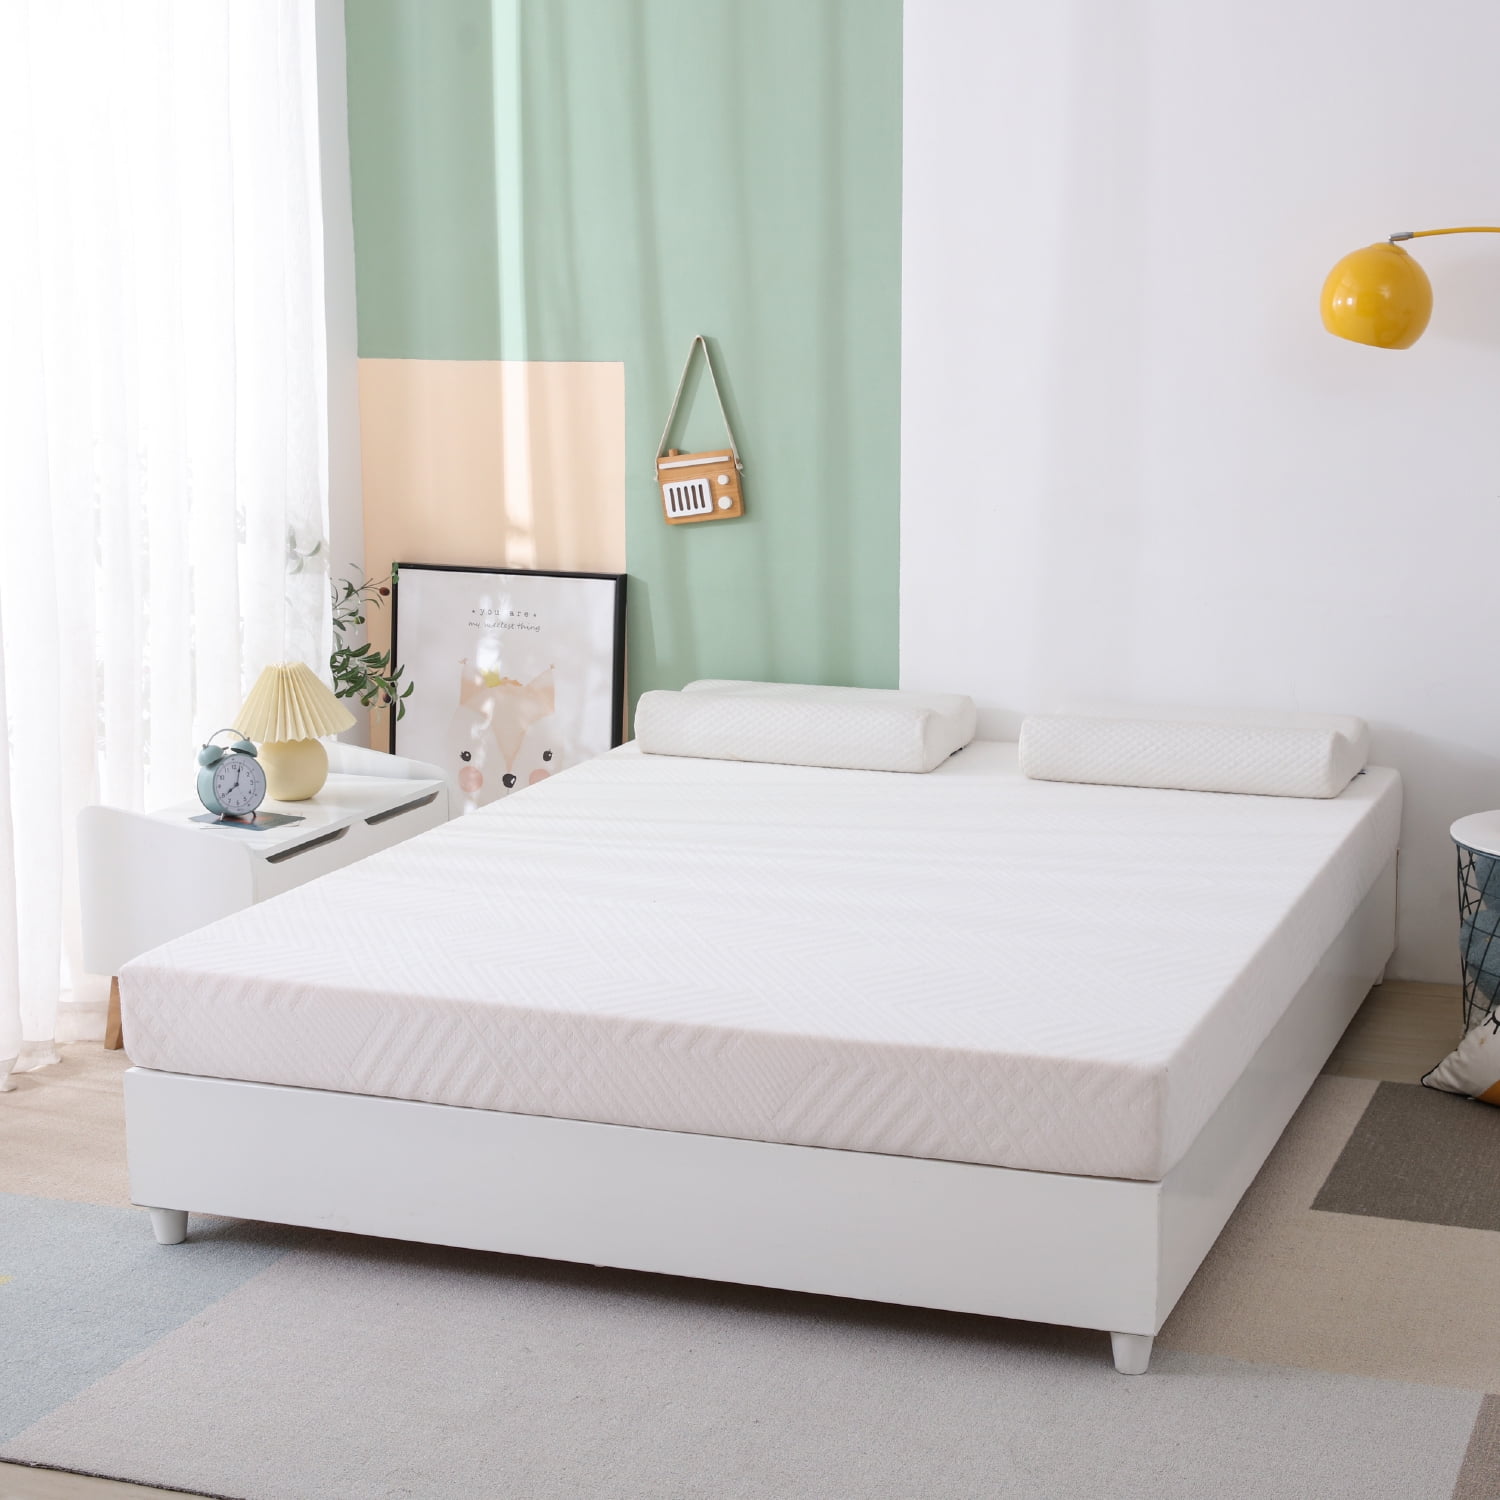 MLILY Twin Size Mattress, 6 inch Bed in a Box, Memory Foam Mattress, White